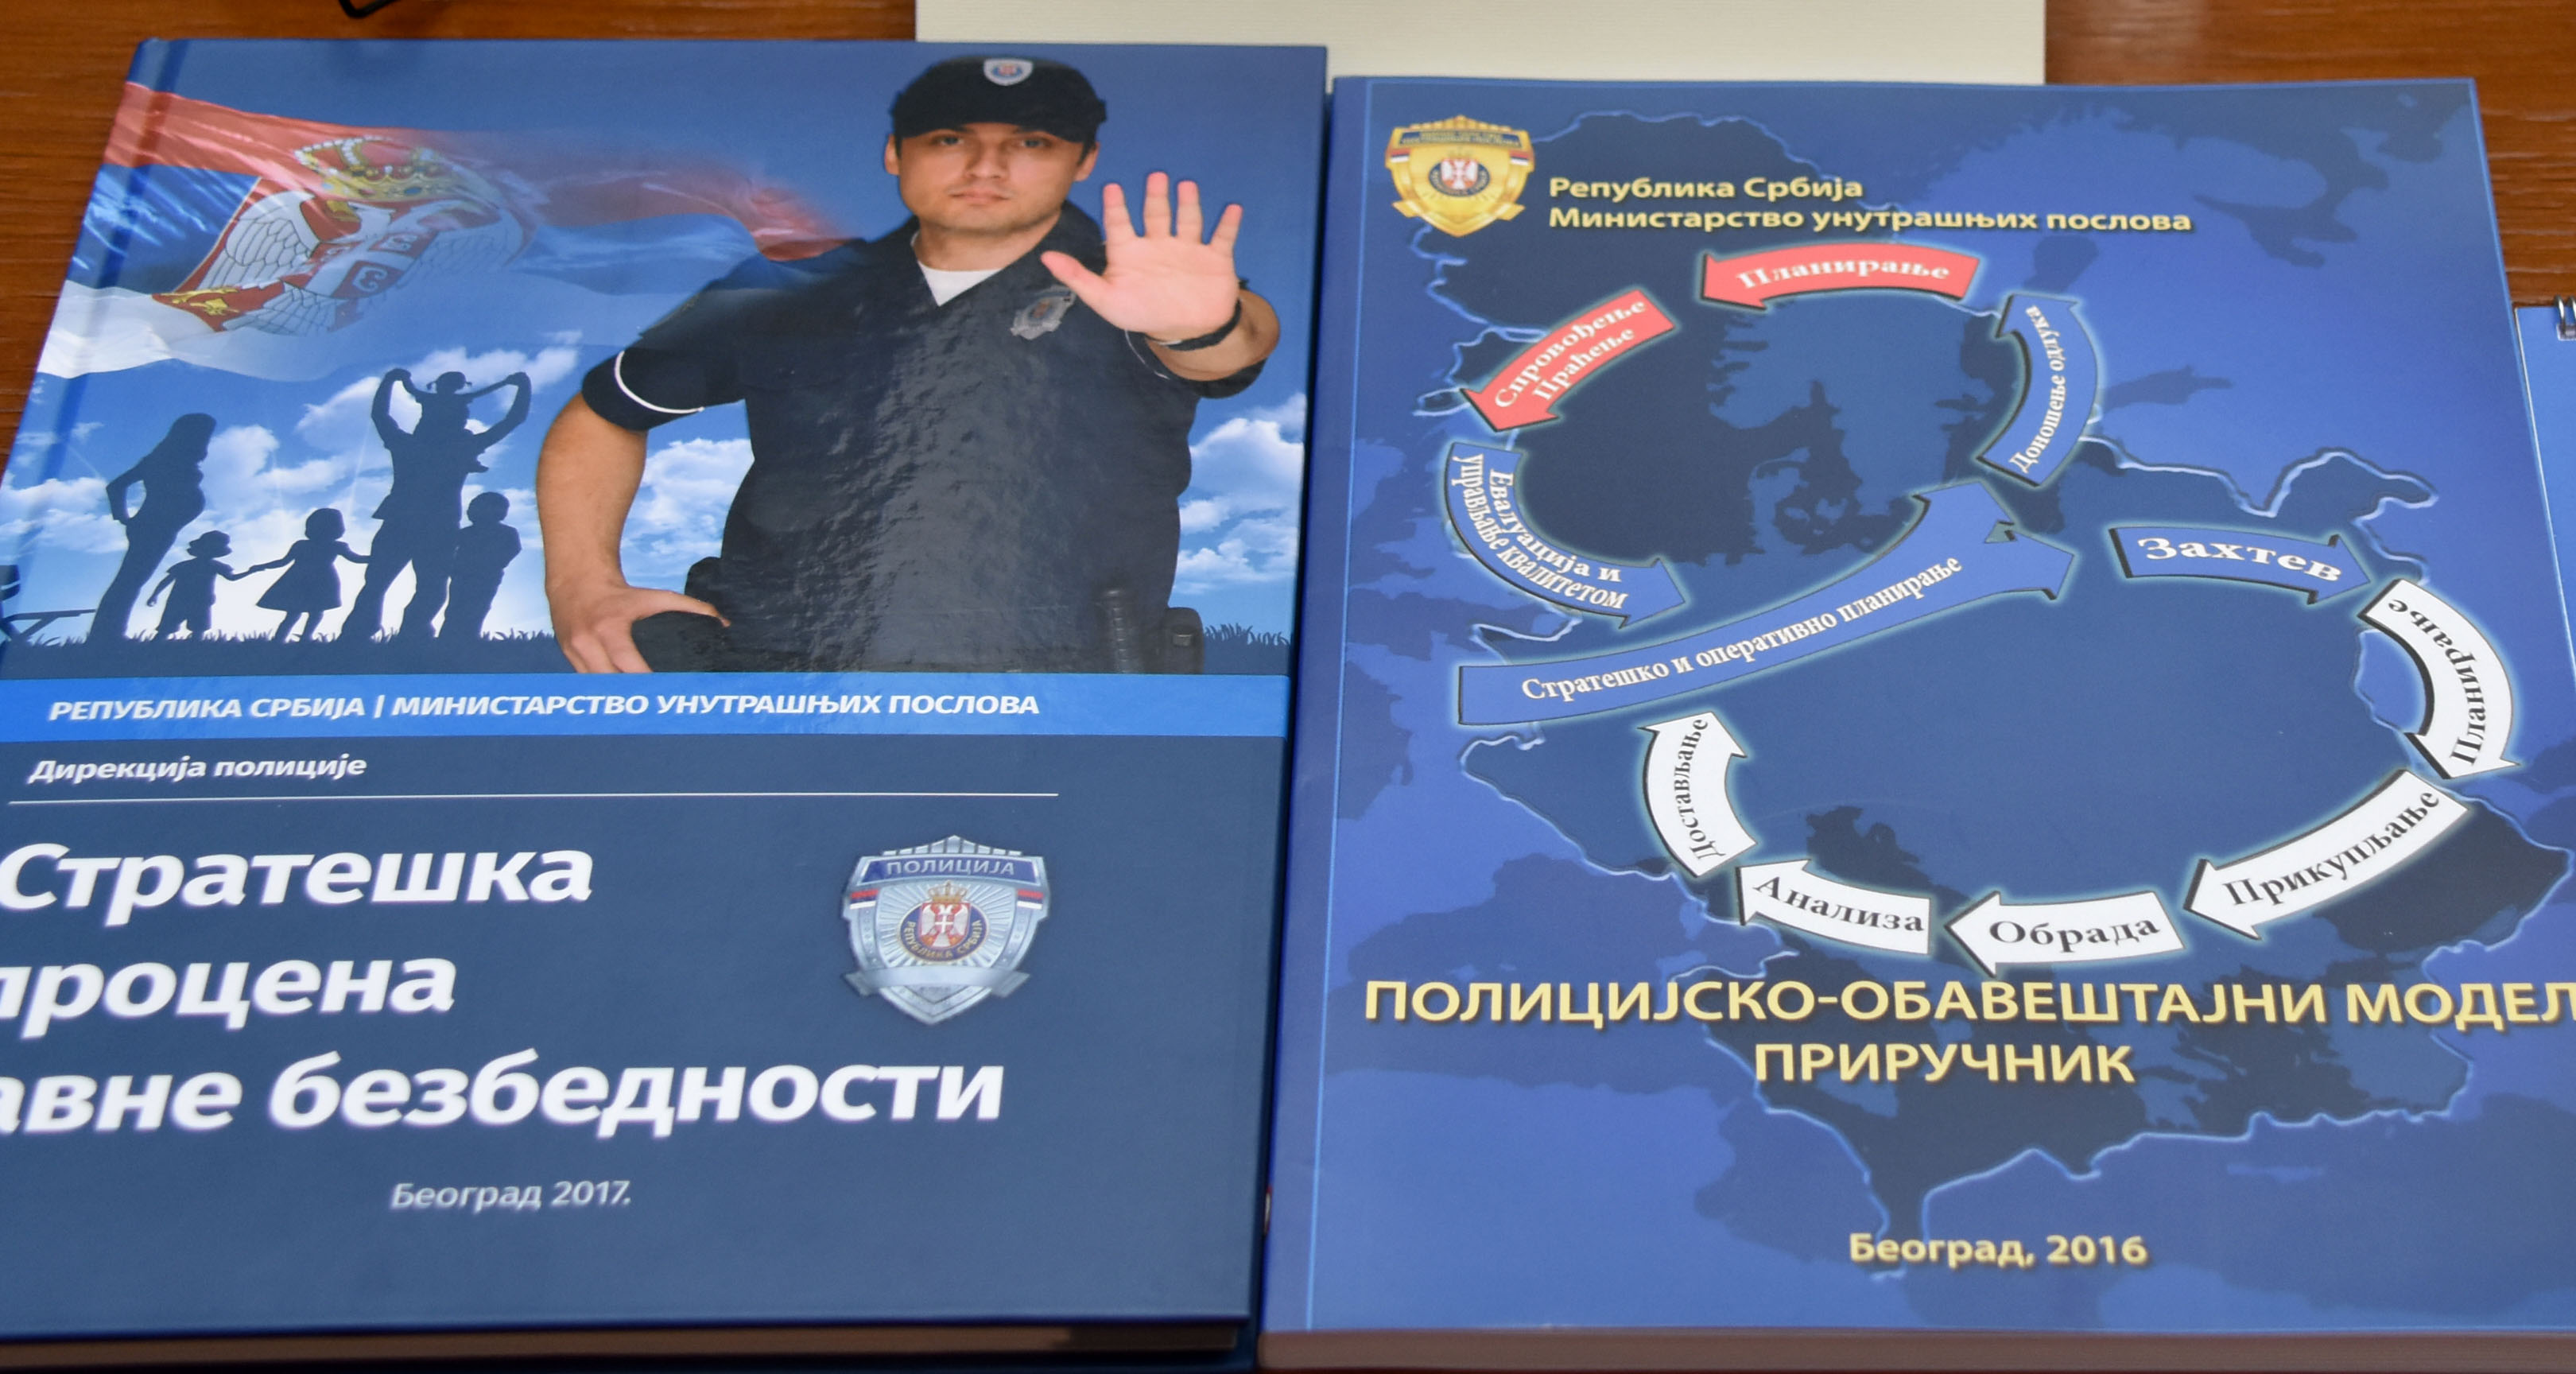 Predstavljen priručnik „Policijsko obaveštajni model“ i dokument „Strateška procena javne bezbednosti“ 